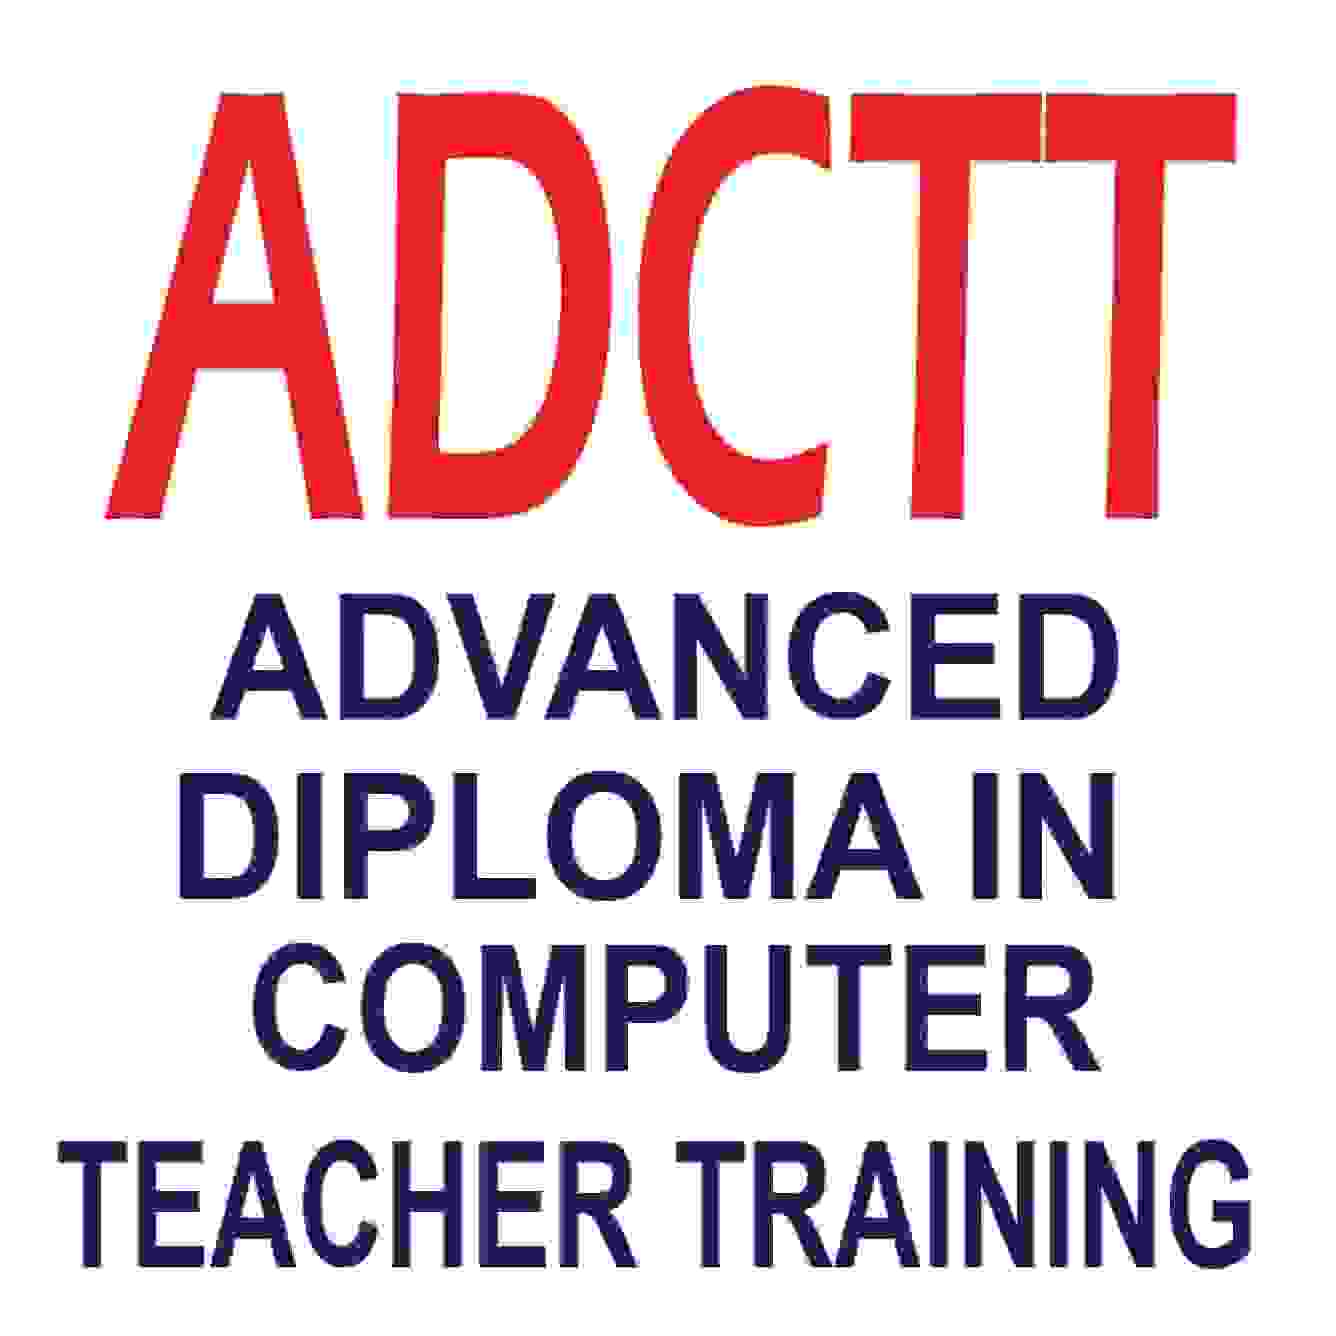 ADCTT (Advanced Diploma in Computer Teacher Training)